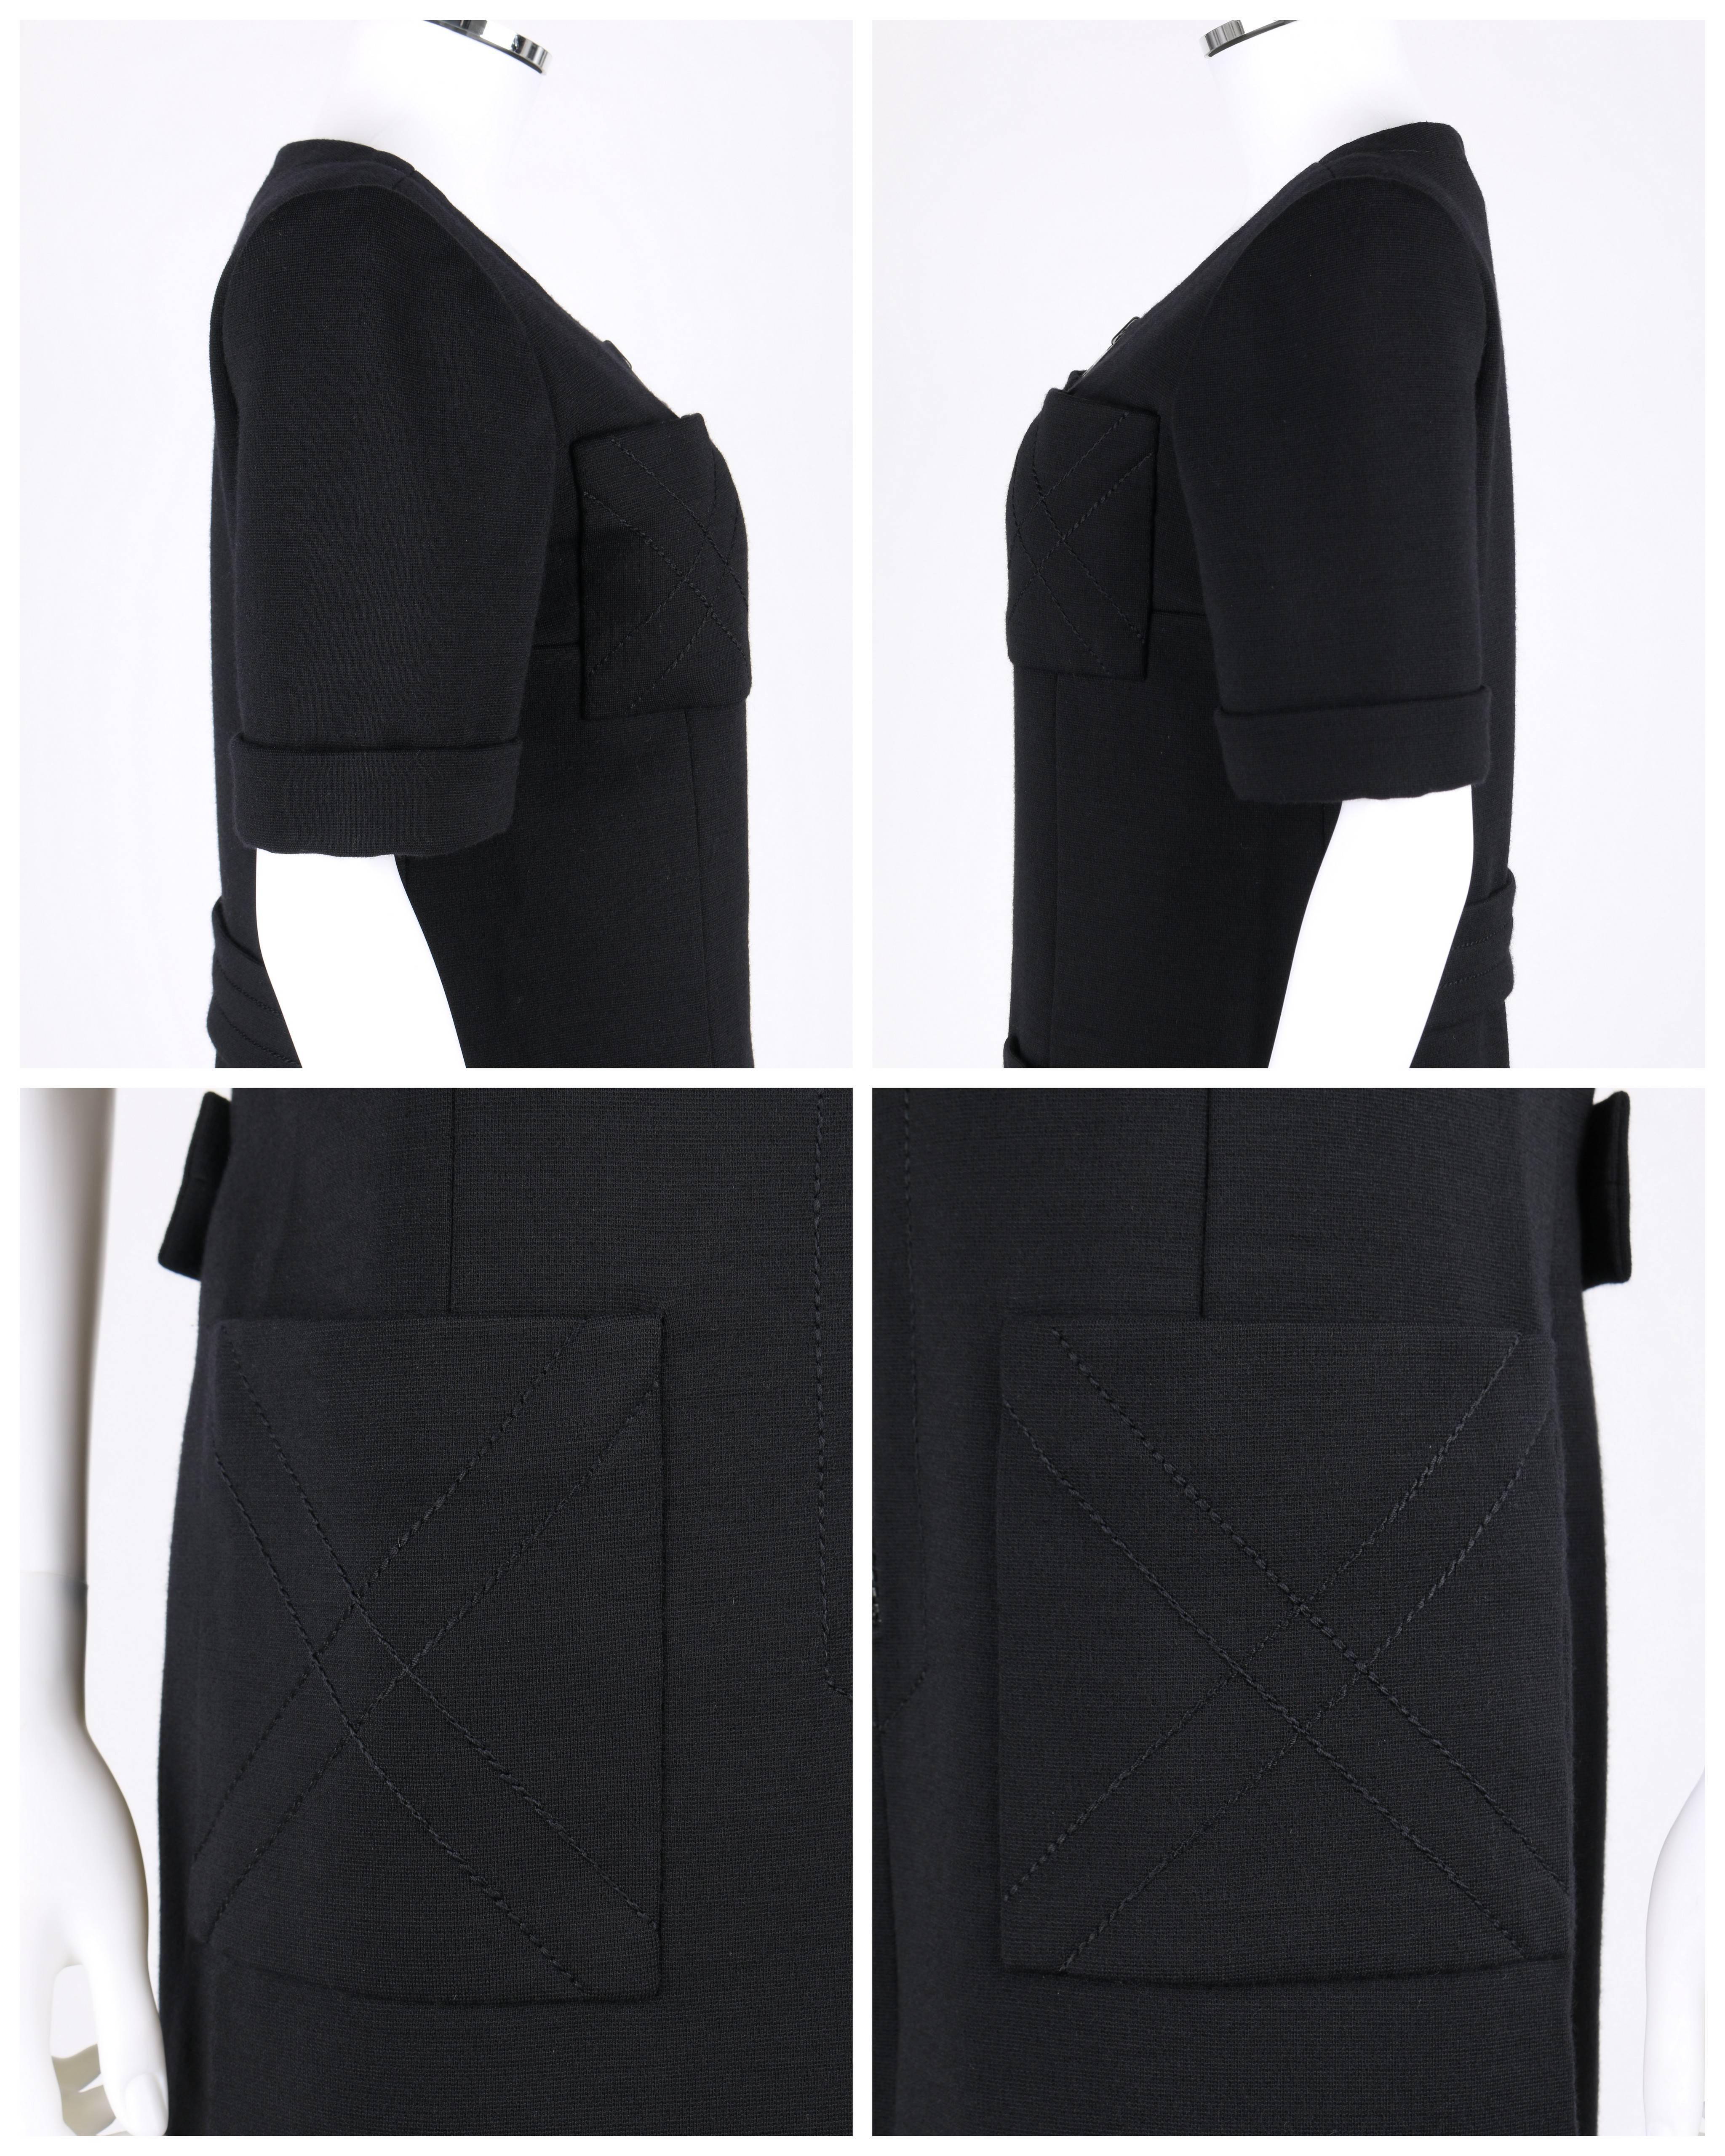 JEAN PATOU c.1960's KARL LAGERFELD Black Short Sleeve Mod 100% Wool Shift Dress 3